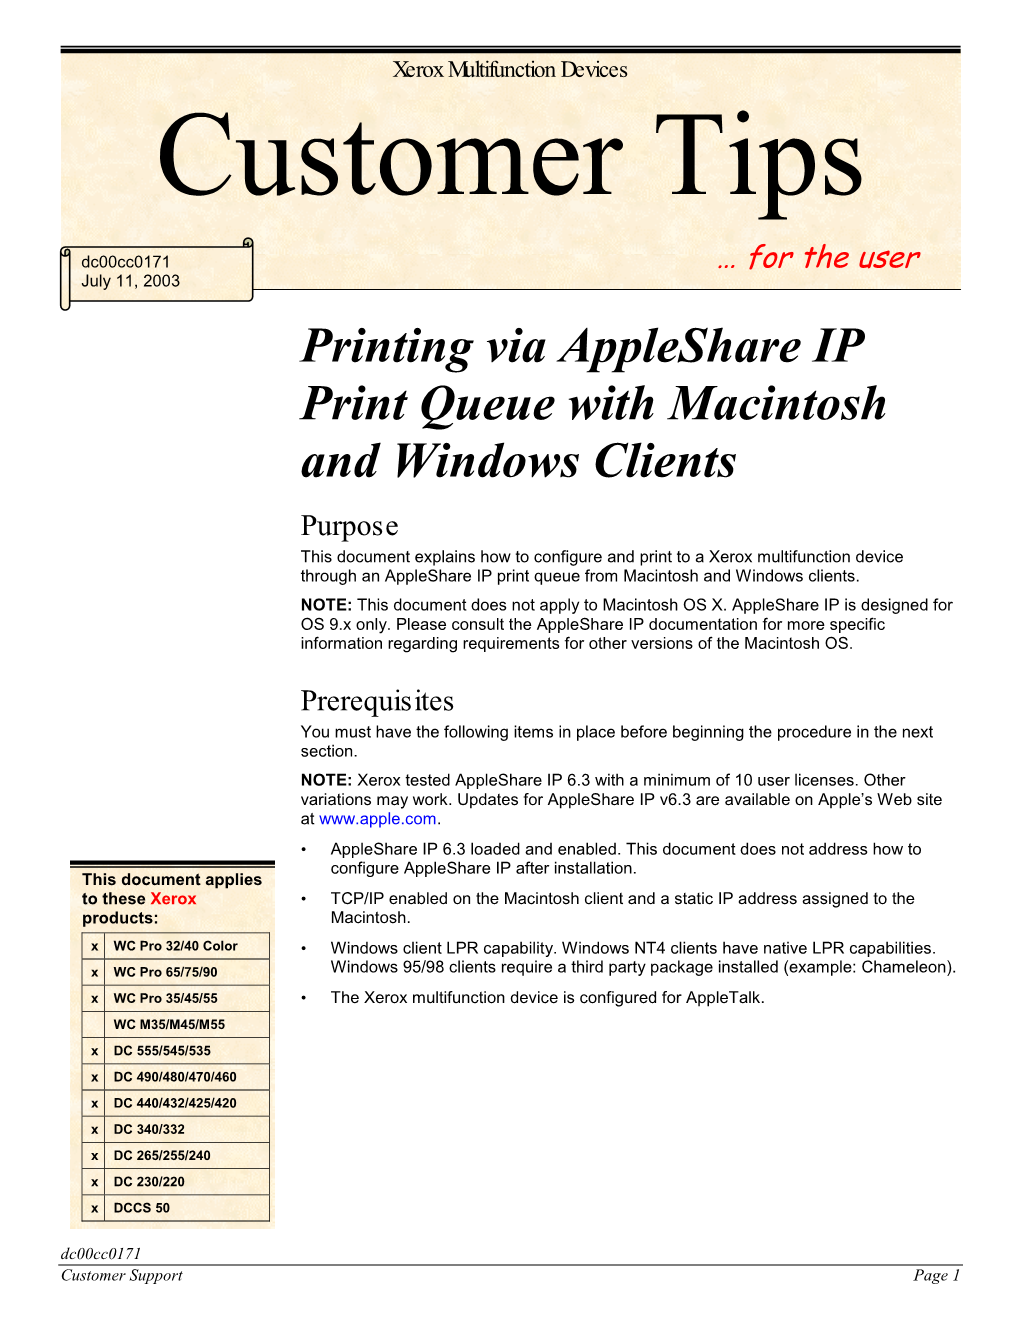 Printing Via Appleshare IP Print Queue with Macintosh And